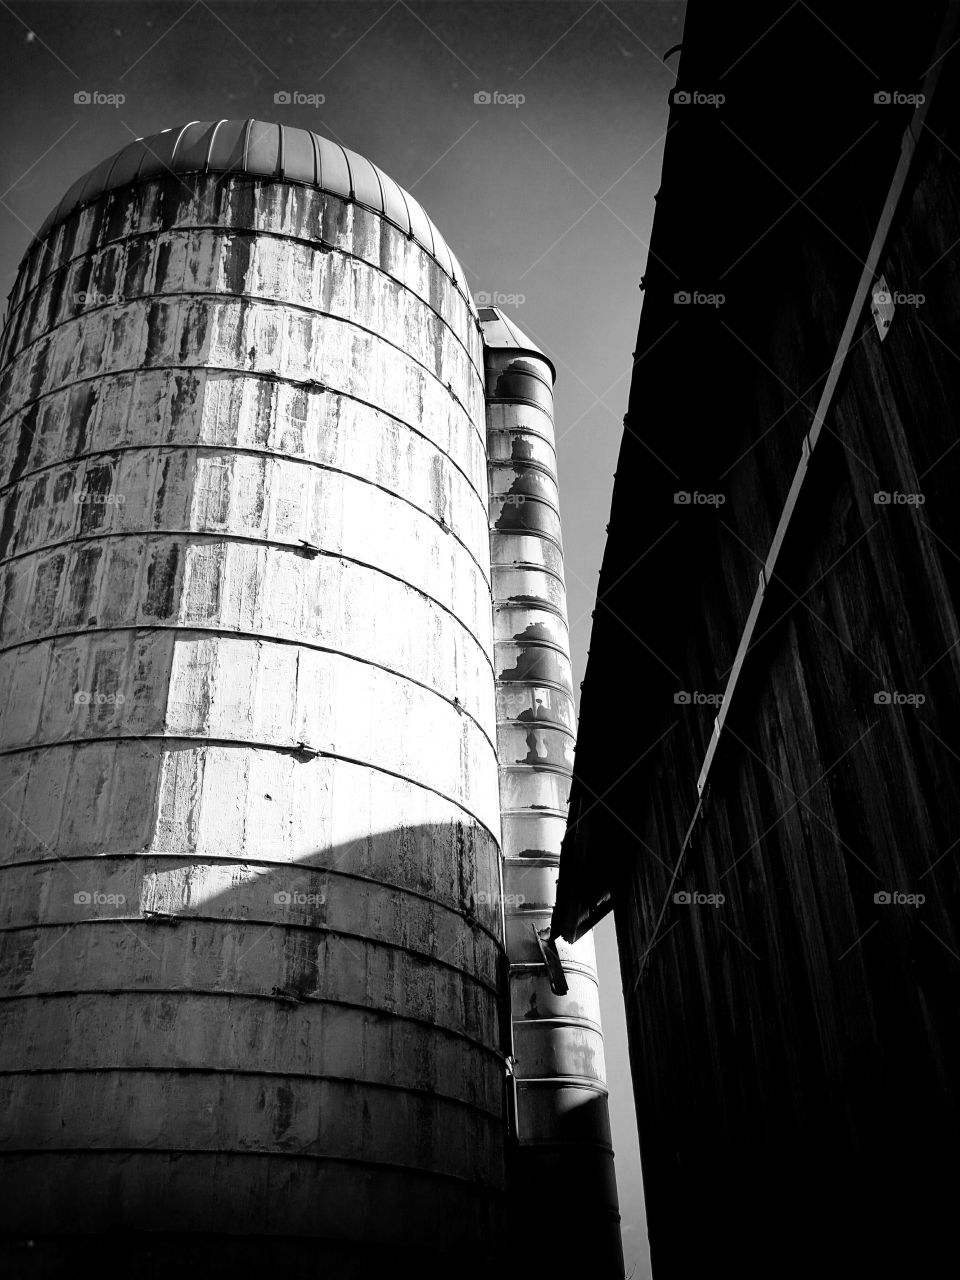 the ol' silo